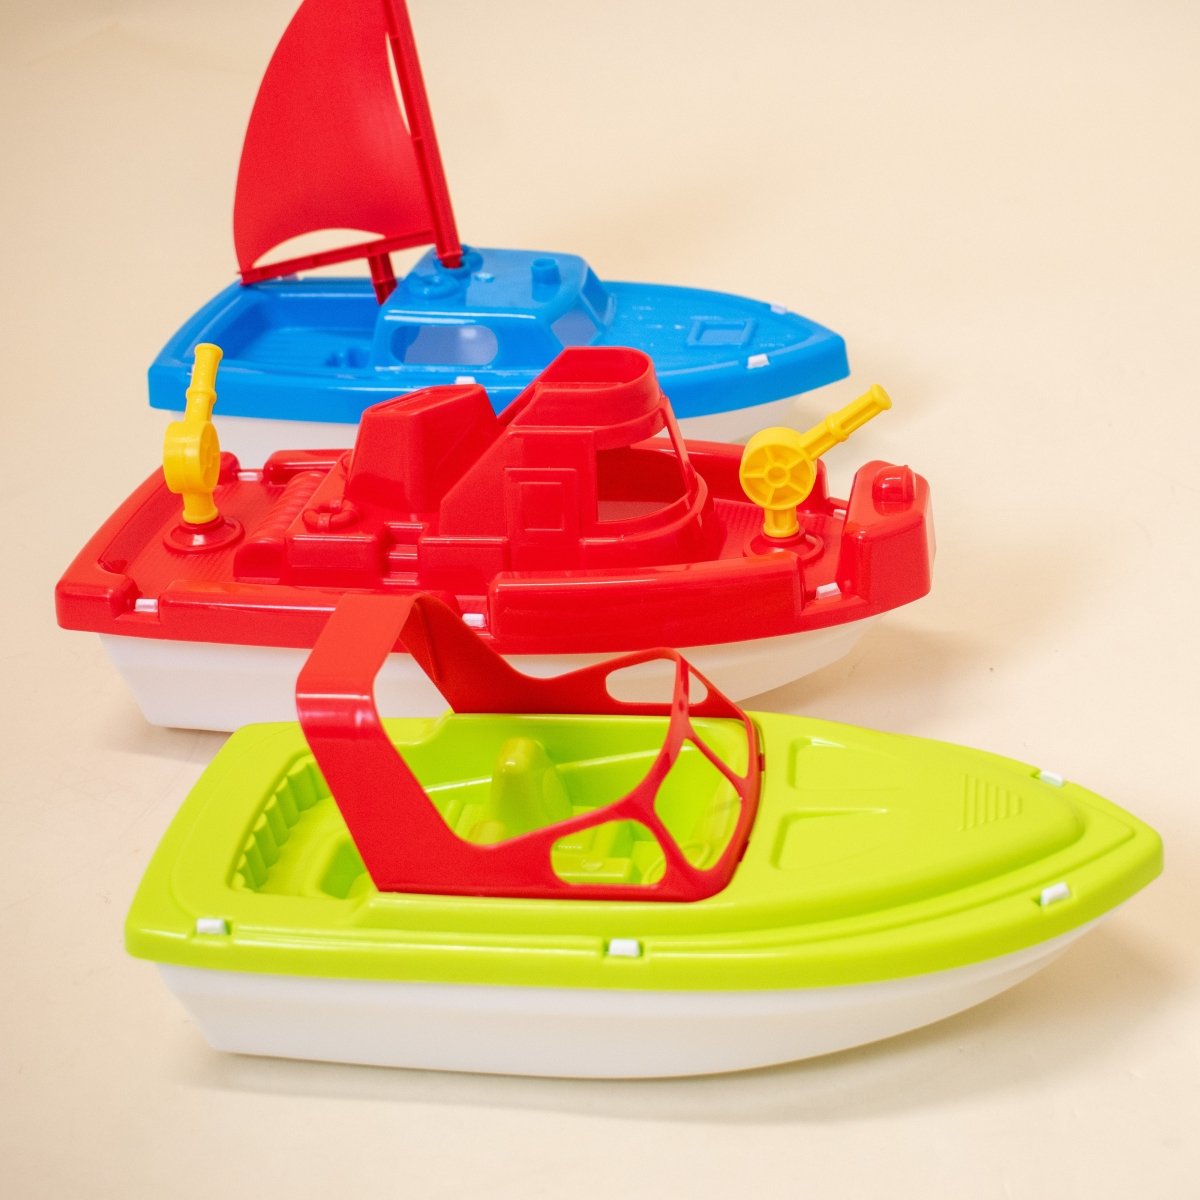  Fishing Boat Toy